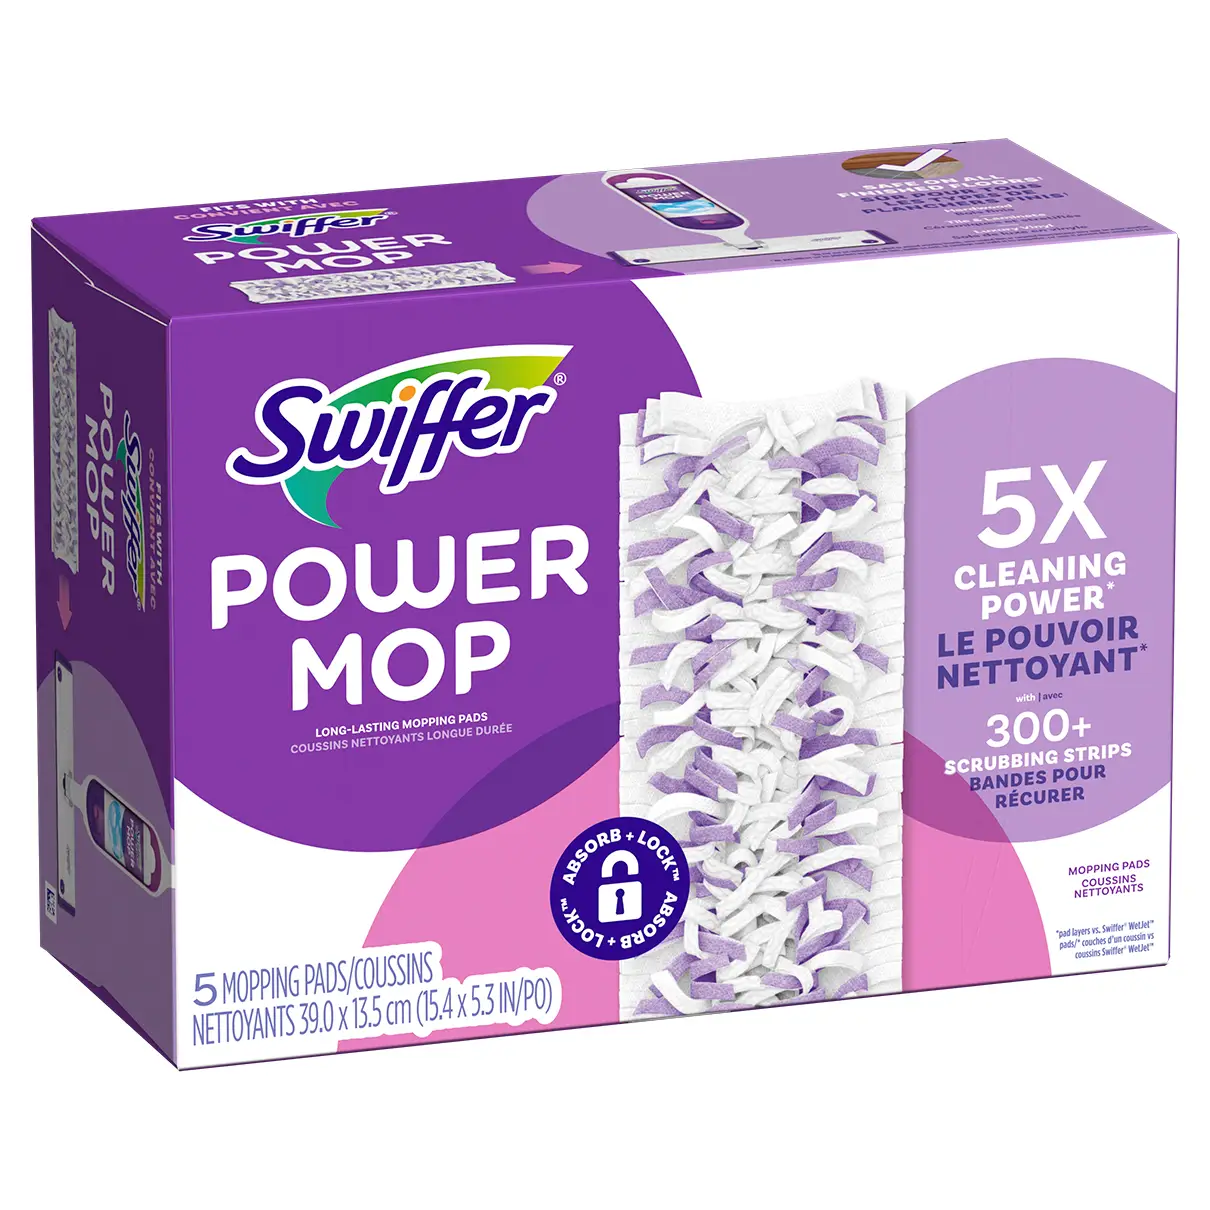 Swiffer PowerMop Multi-Surface Mop Kit review - Reviewed